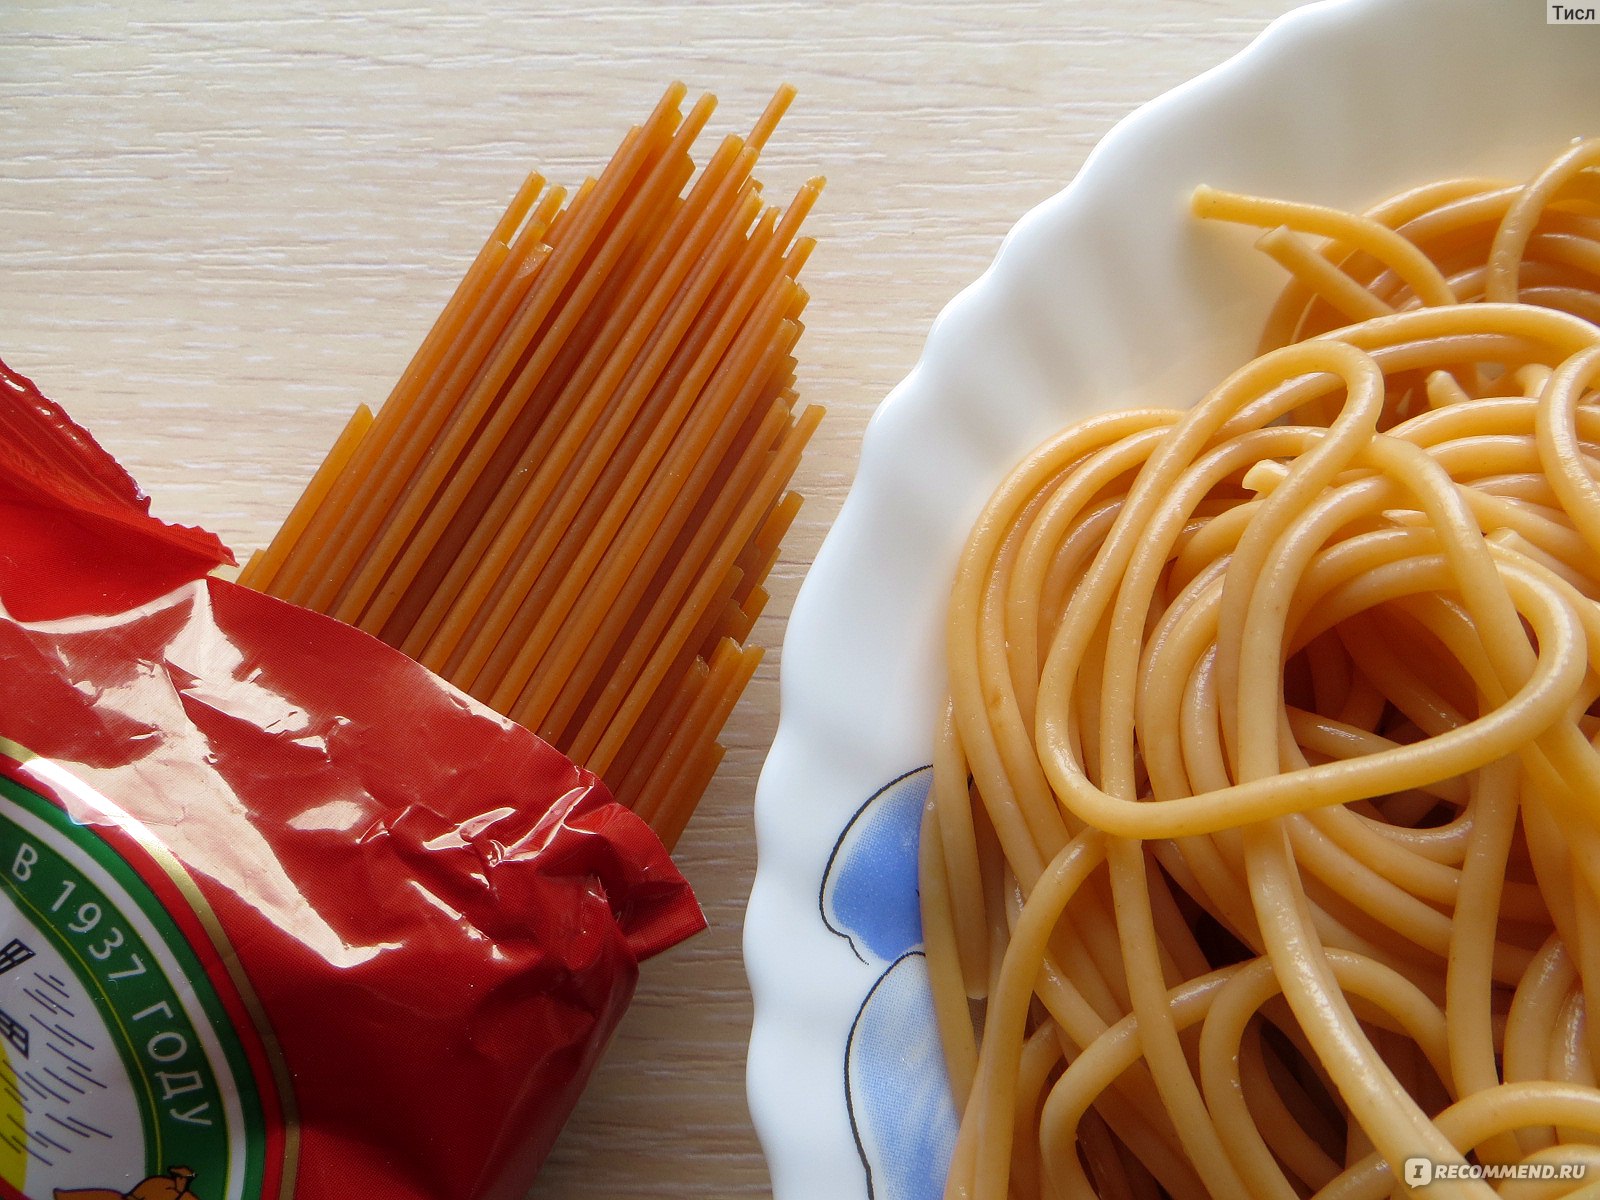 Фото спагетти в упаковке фото